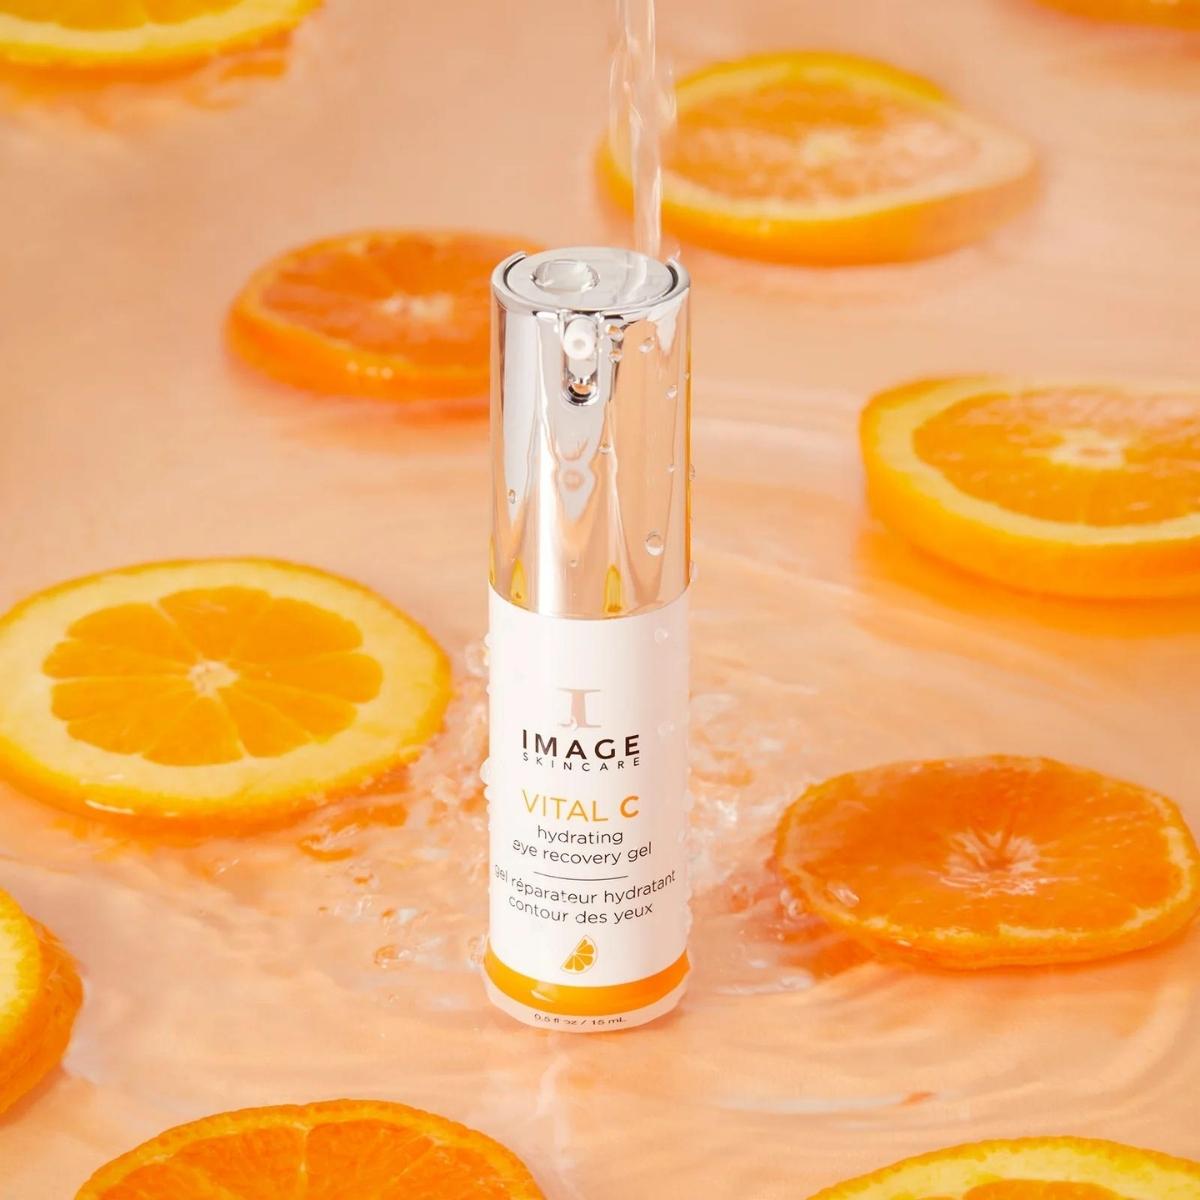 IMAGE Skincare Vital C Hydrating Eye Recovery Gel lifestyle with orange.  